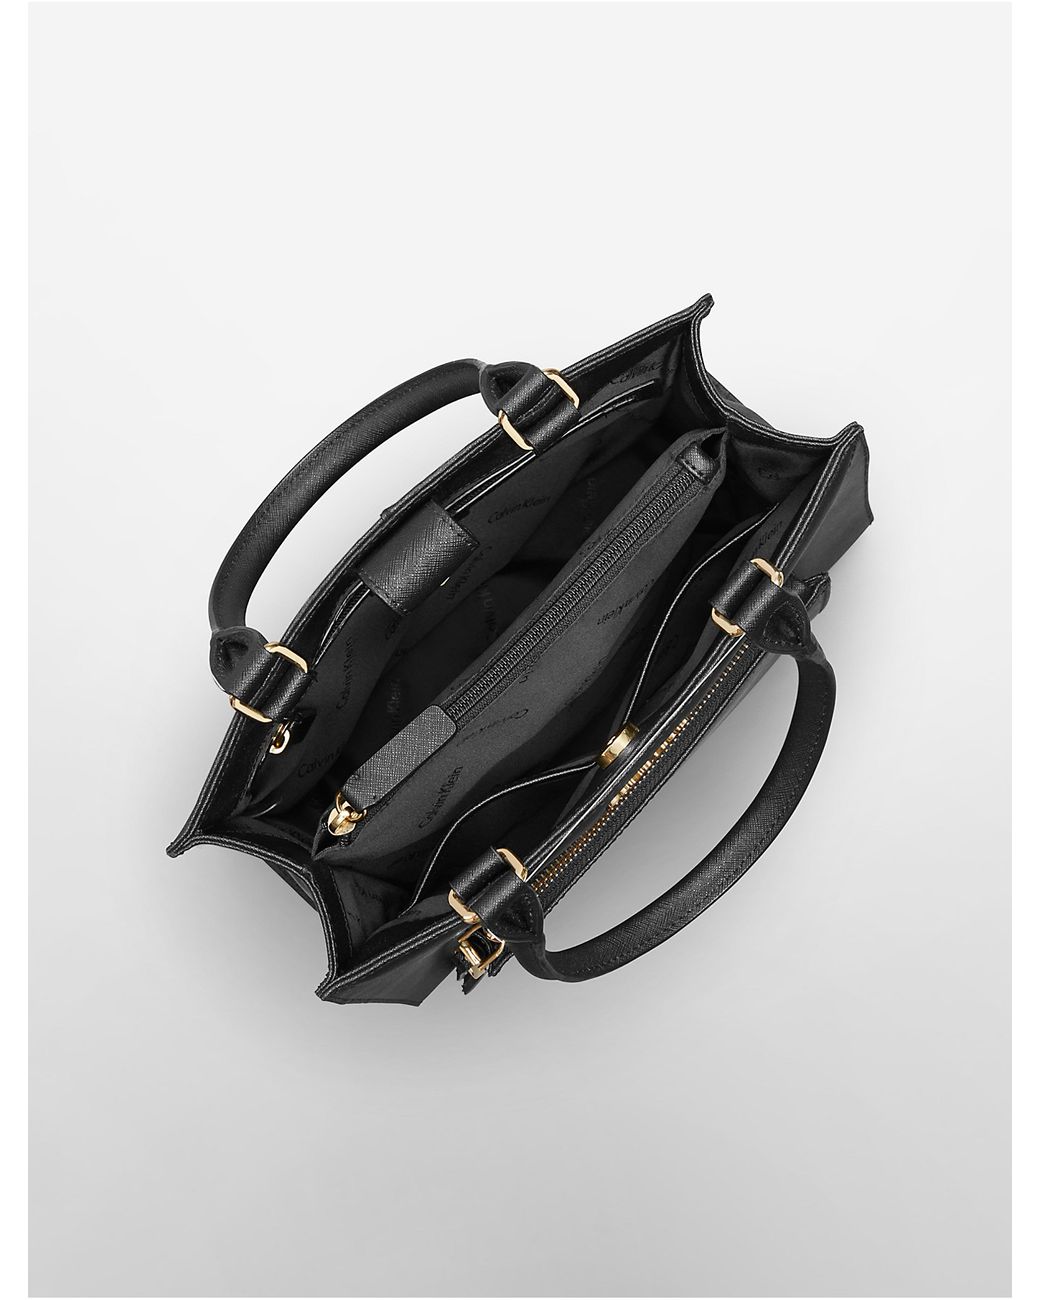 Descubrir 52+ imagen calvin klein black handbag leather